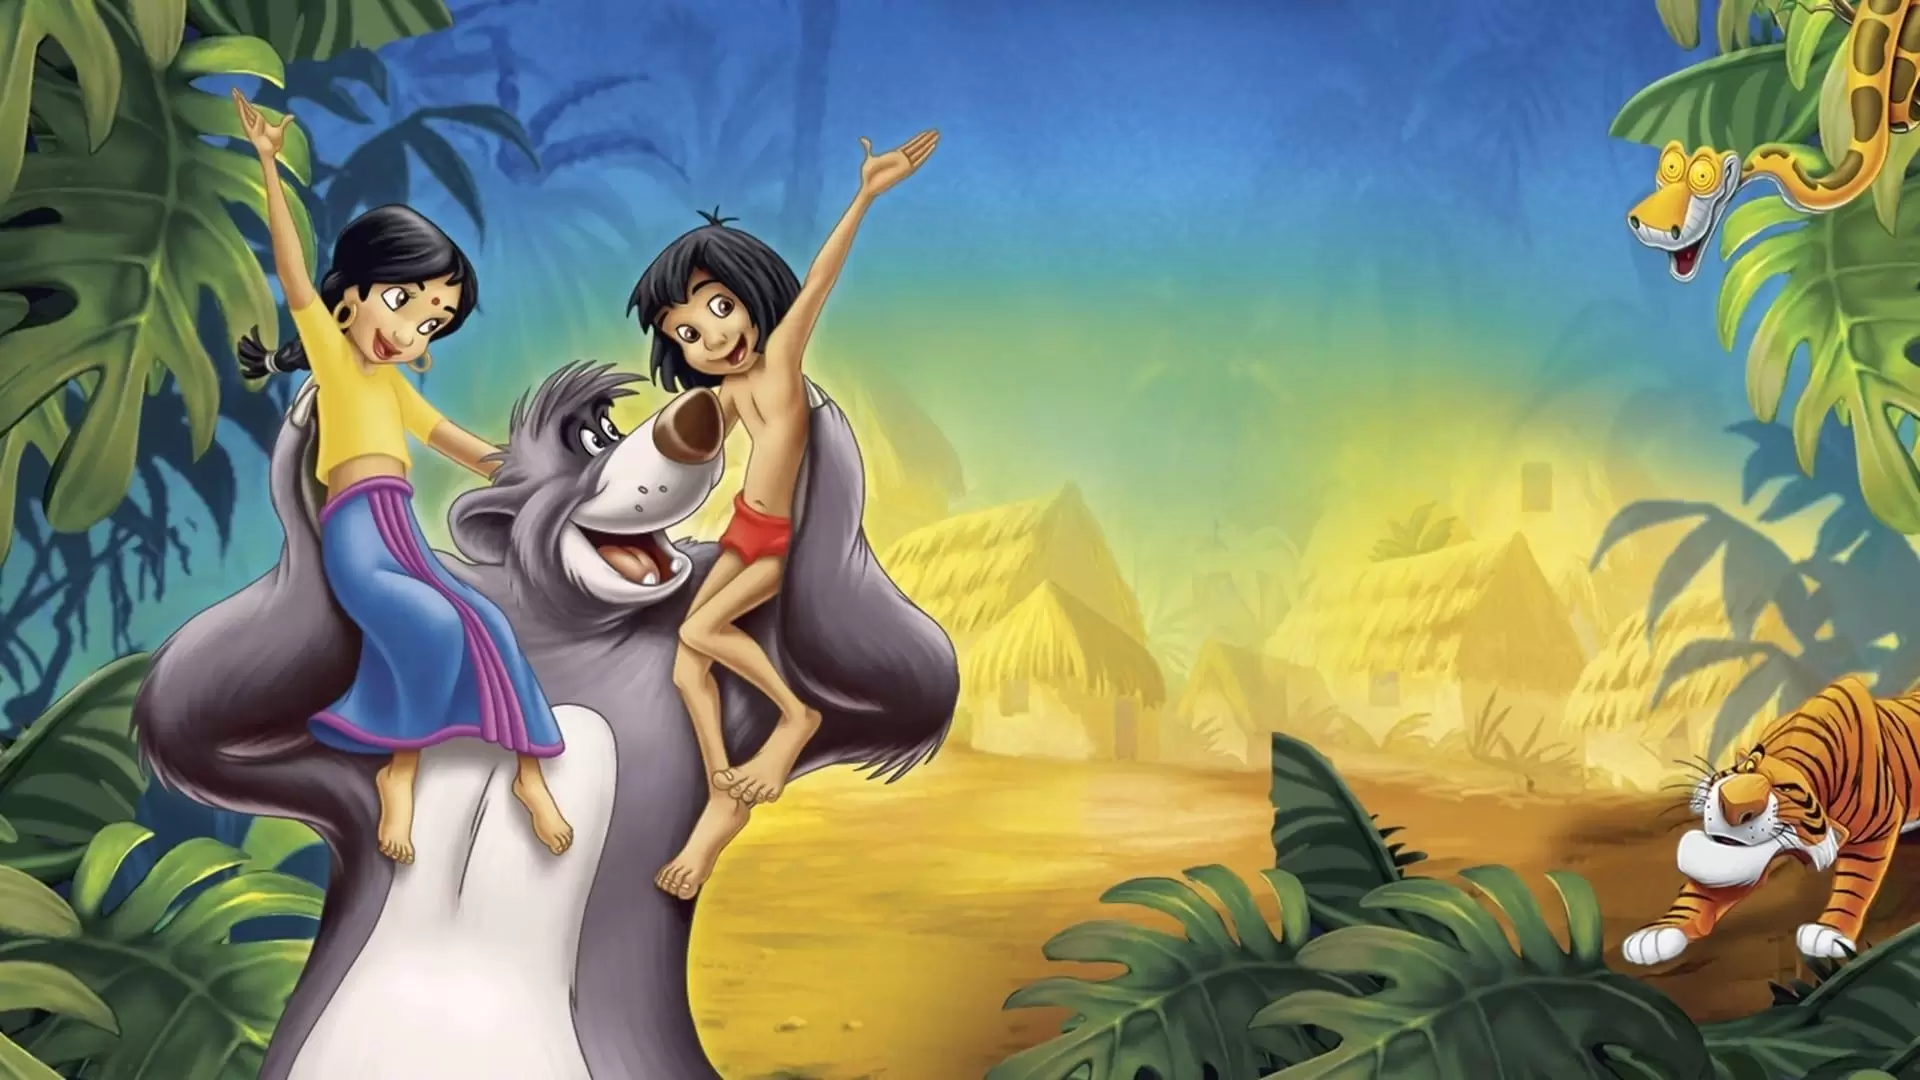 دانلود انیمیشن The Jungle Book 2 2003 (کتاب جنگل ۲) با زیرنویس فارسی